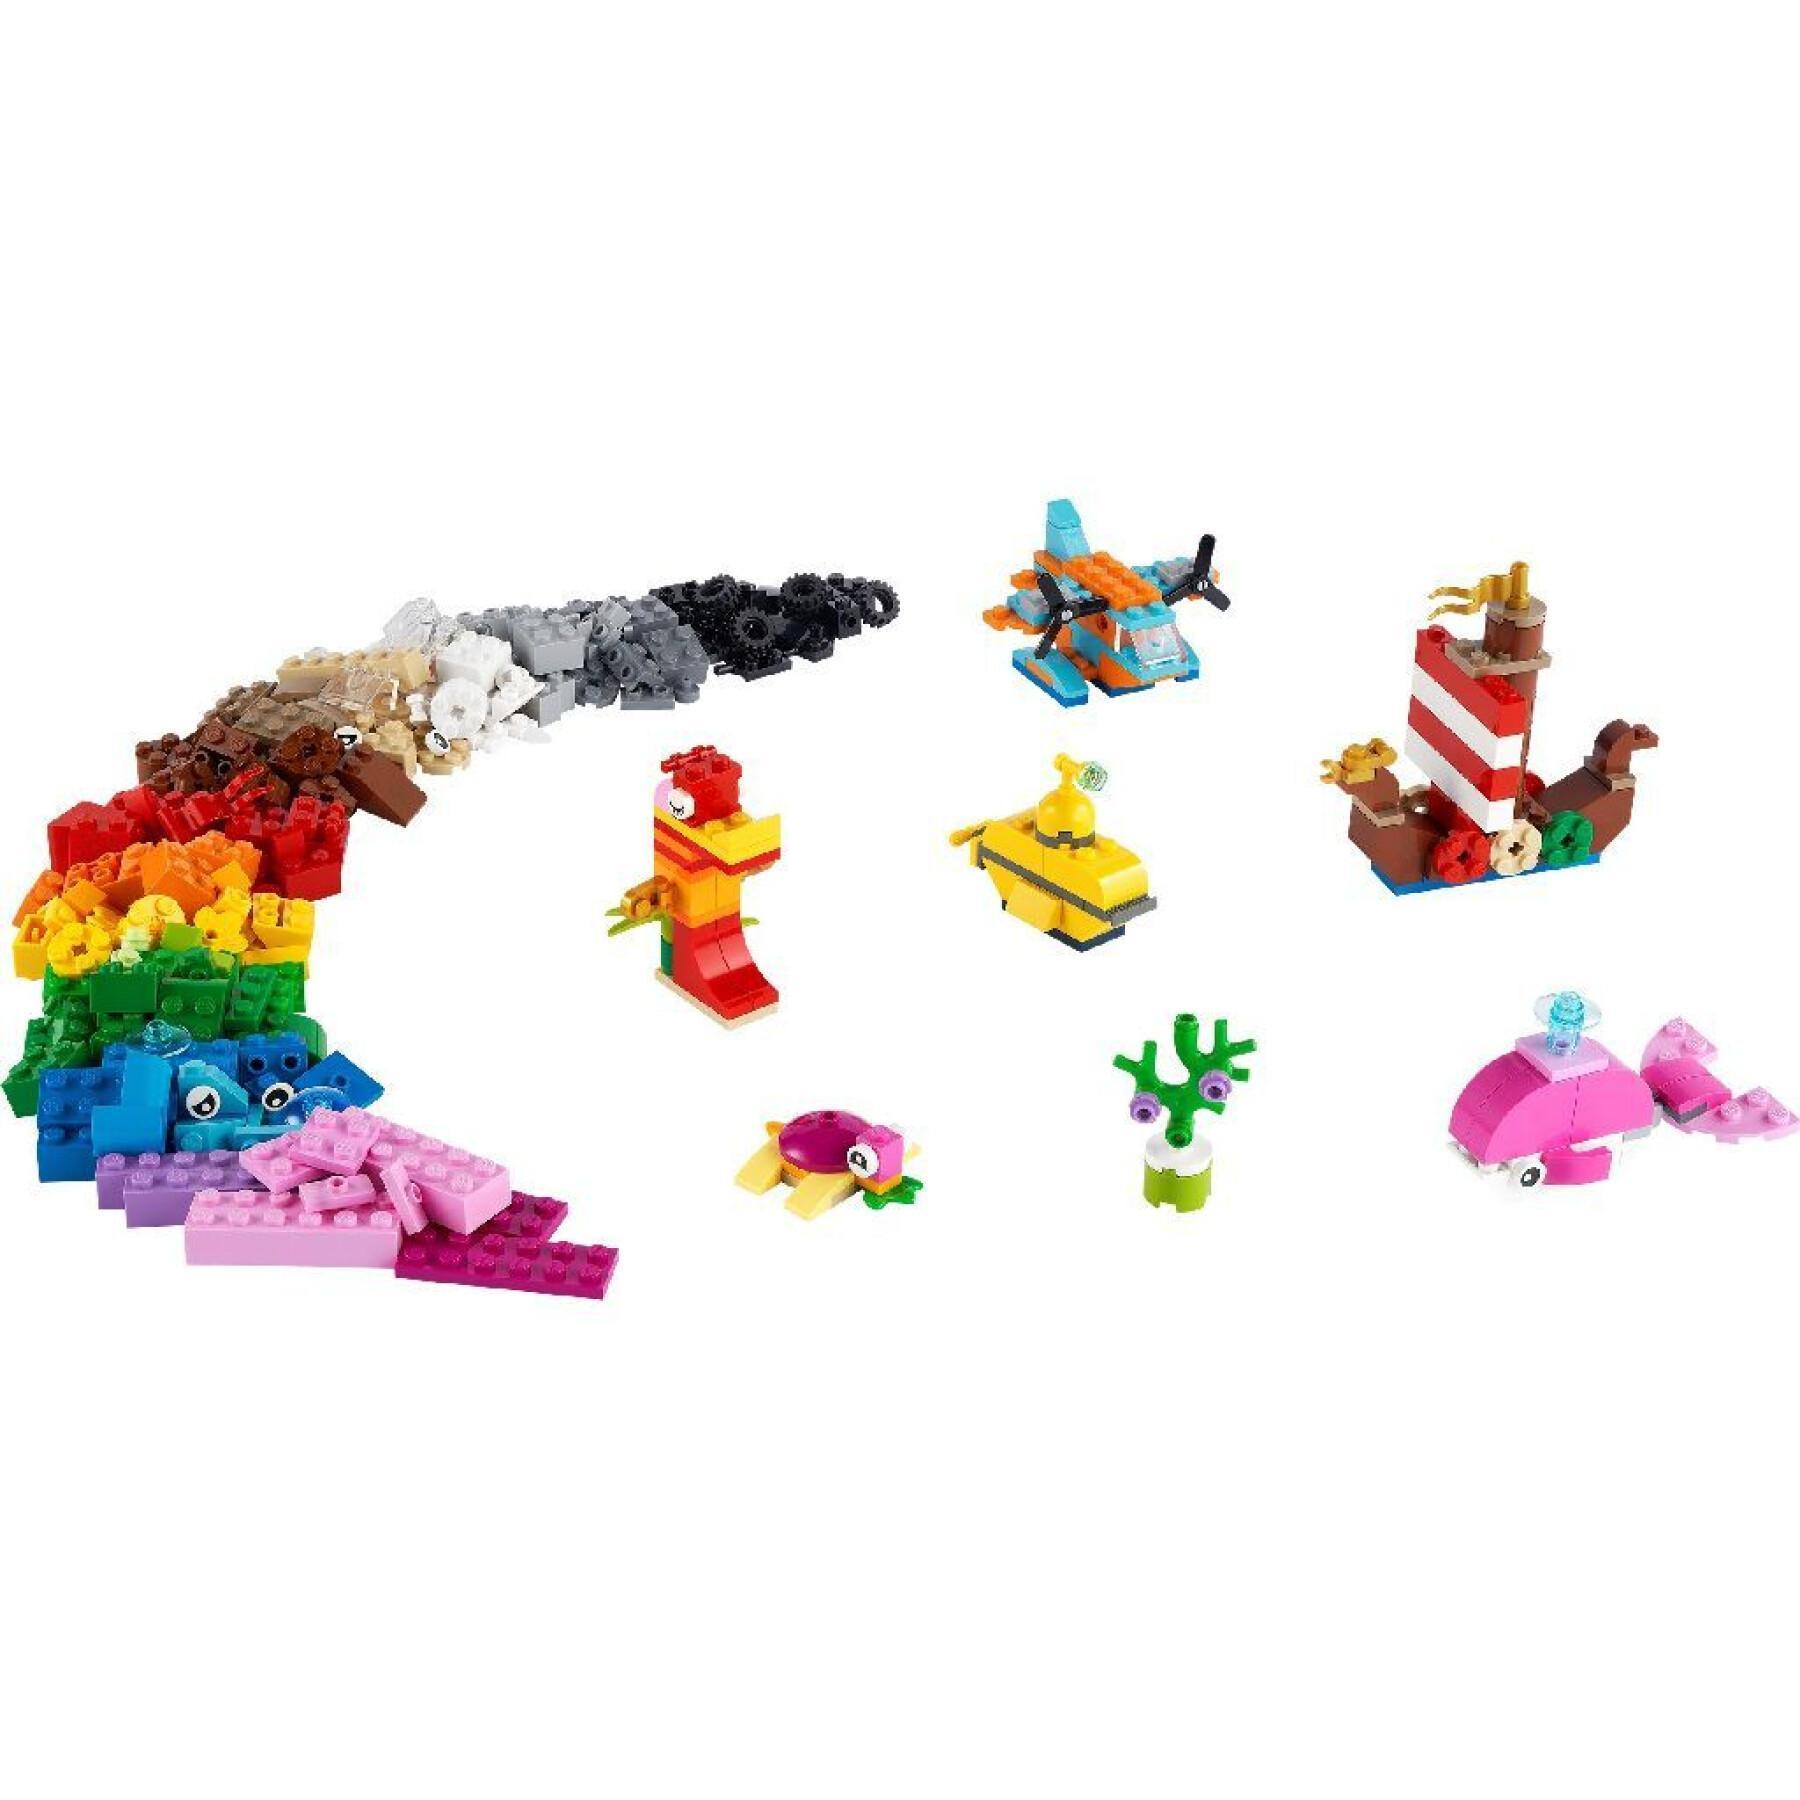 Creative building sets ocean Lego Ideas